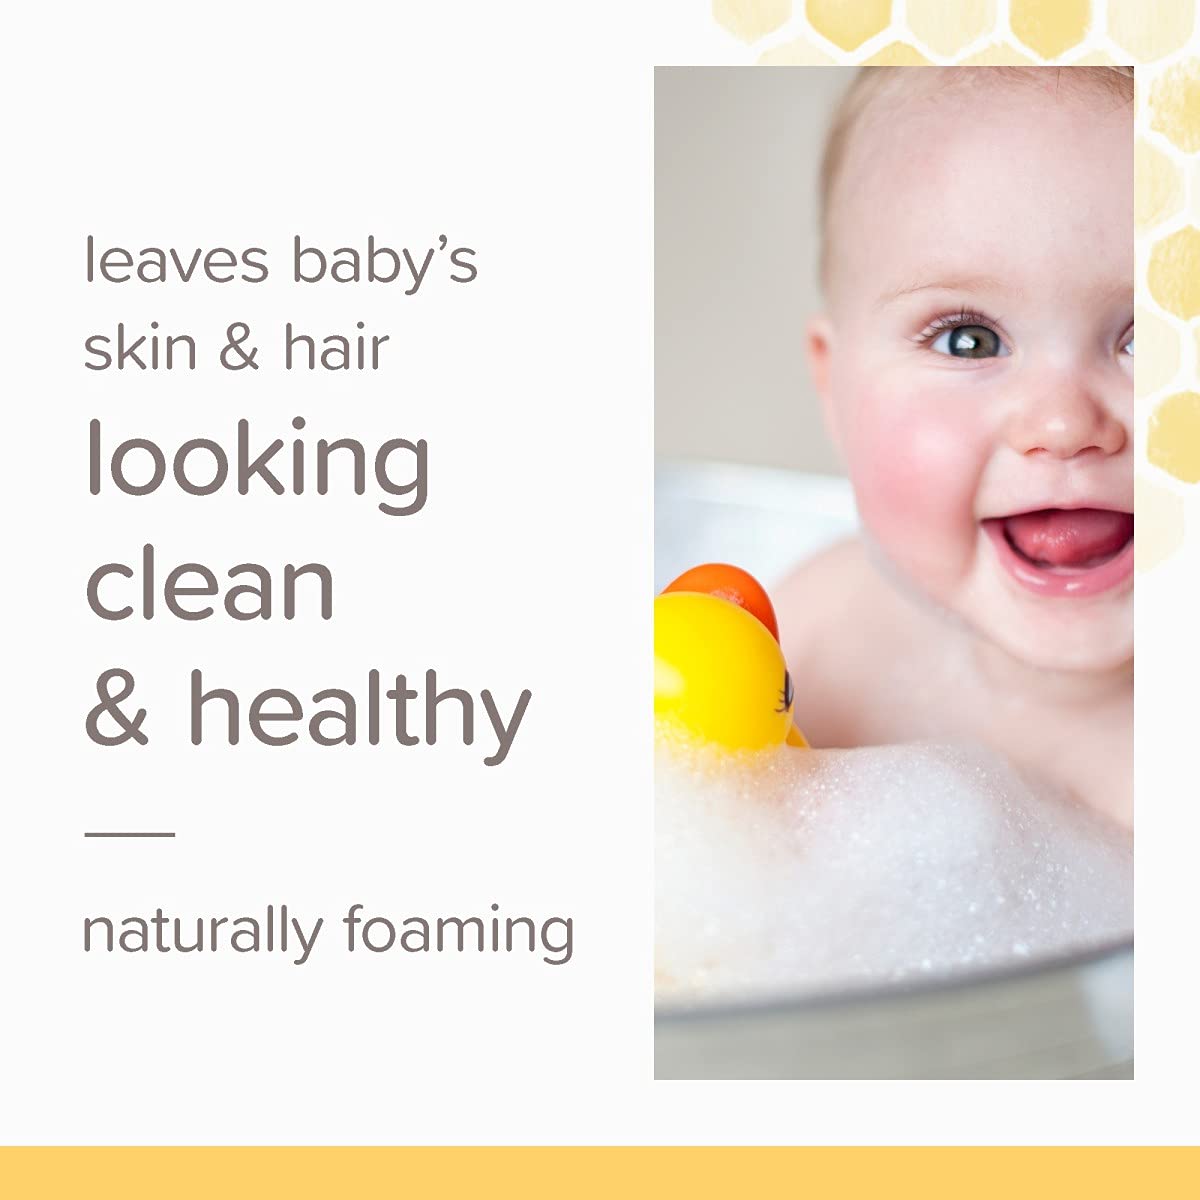 Burt's Bees Baby Shampoo & Wash Set, Tear Free Non Irritating Soap, Gentle Plant Based Formula, Pediatrician Tested, Original - 12 oz (Pack of 3)